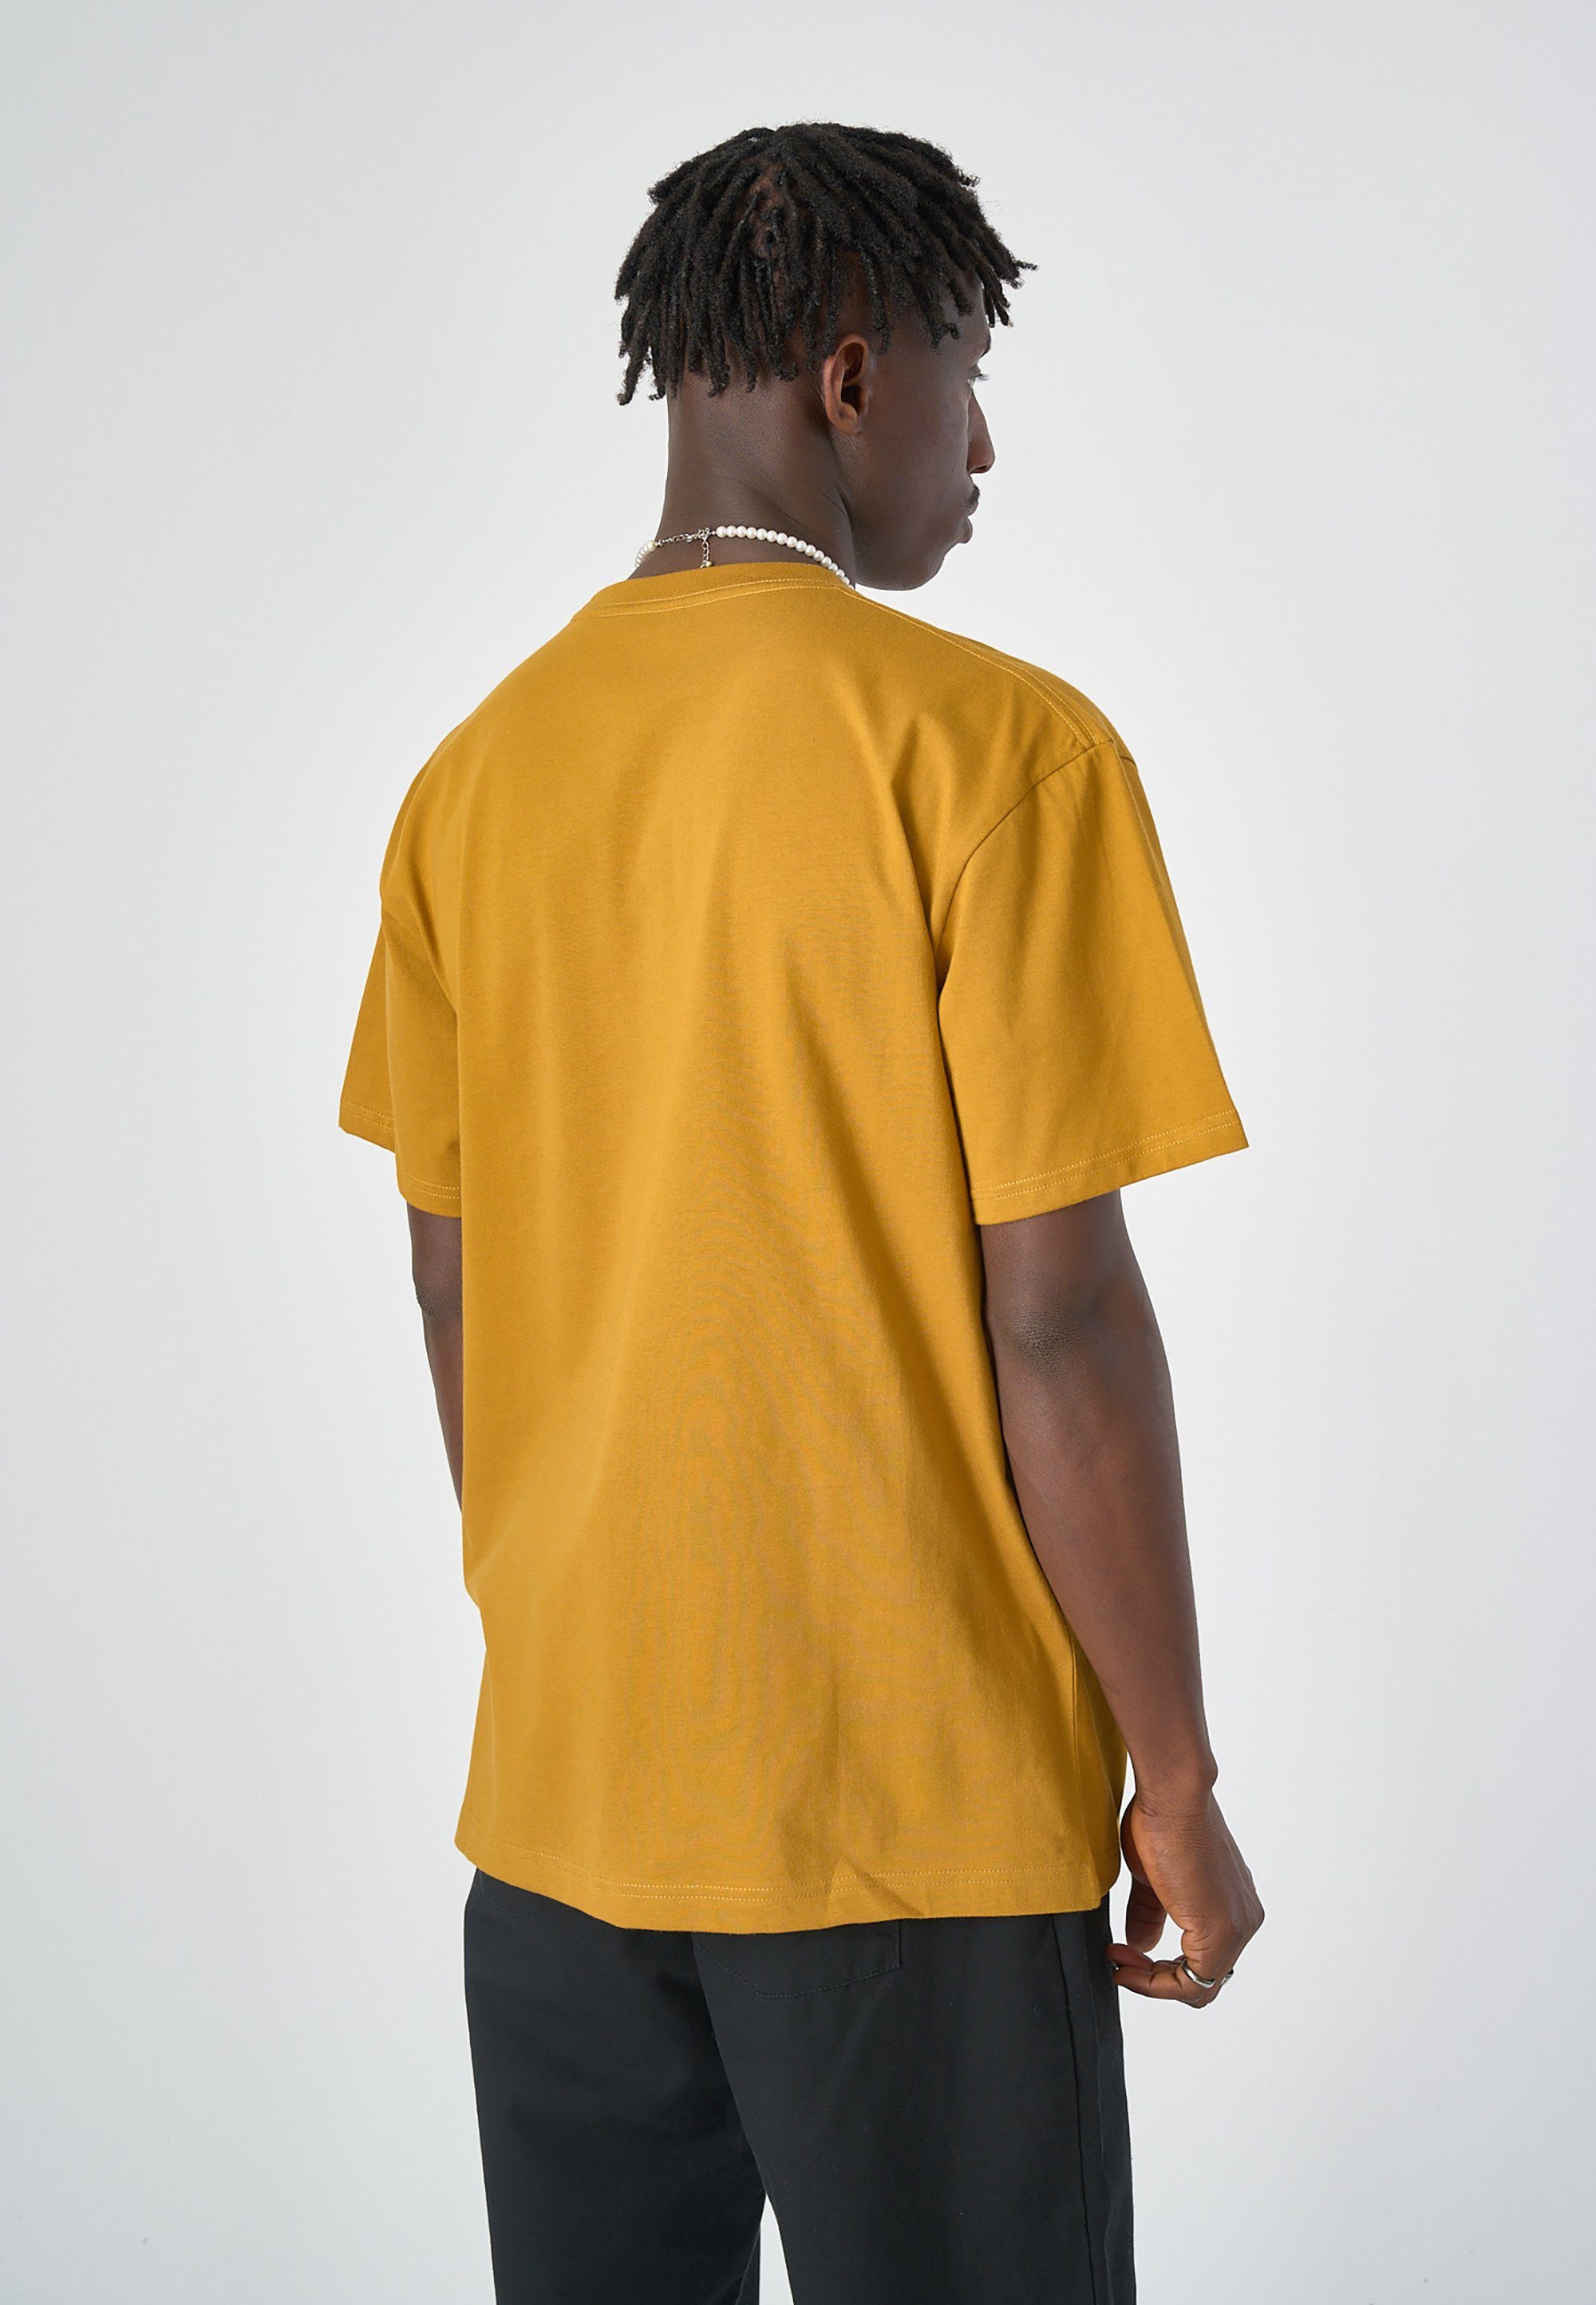 T-Shirt Gull lockerem Schnitt Embroidery Mono mit gelb Cleptomanicx